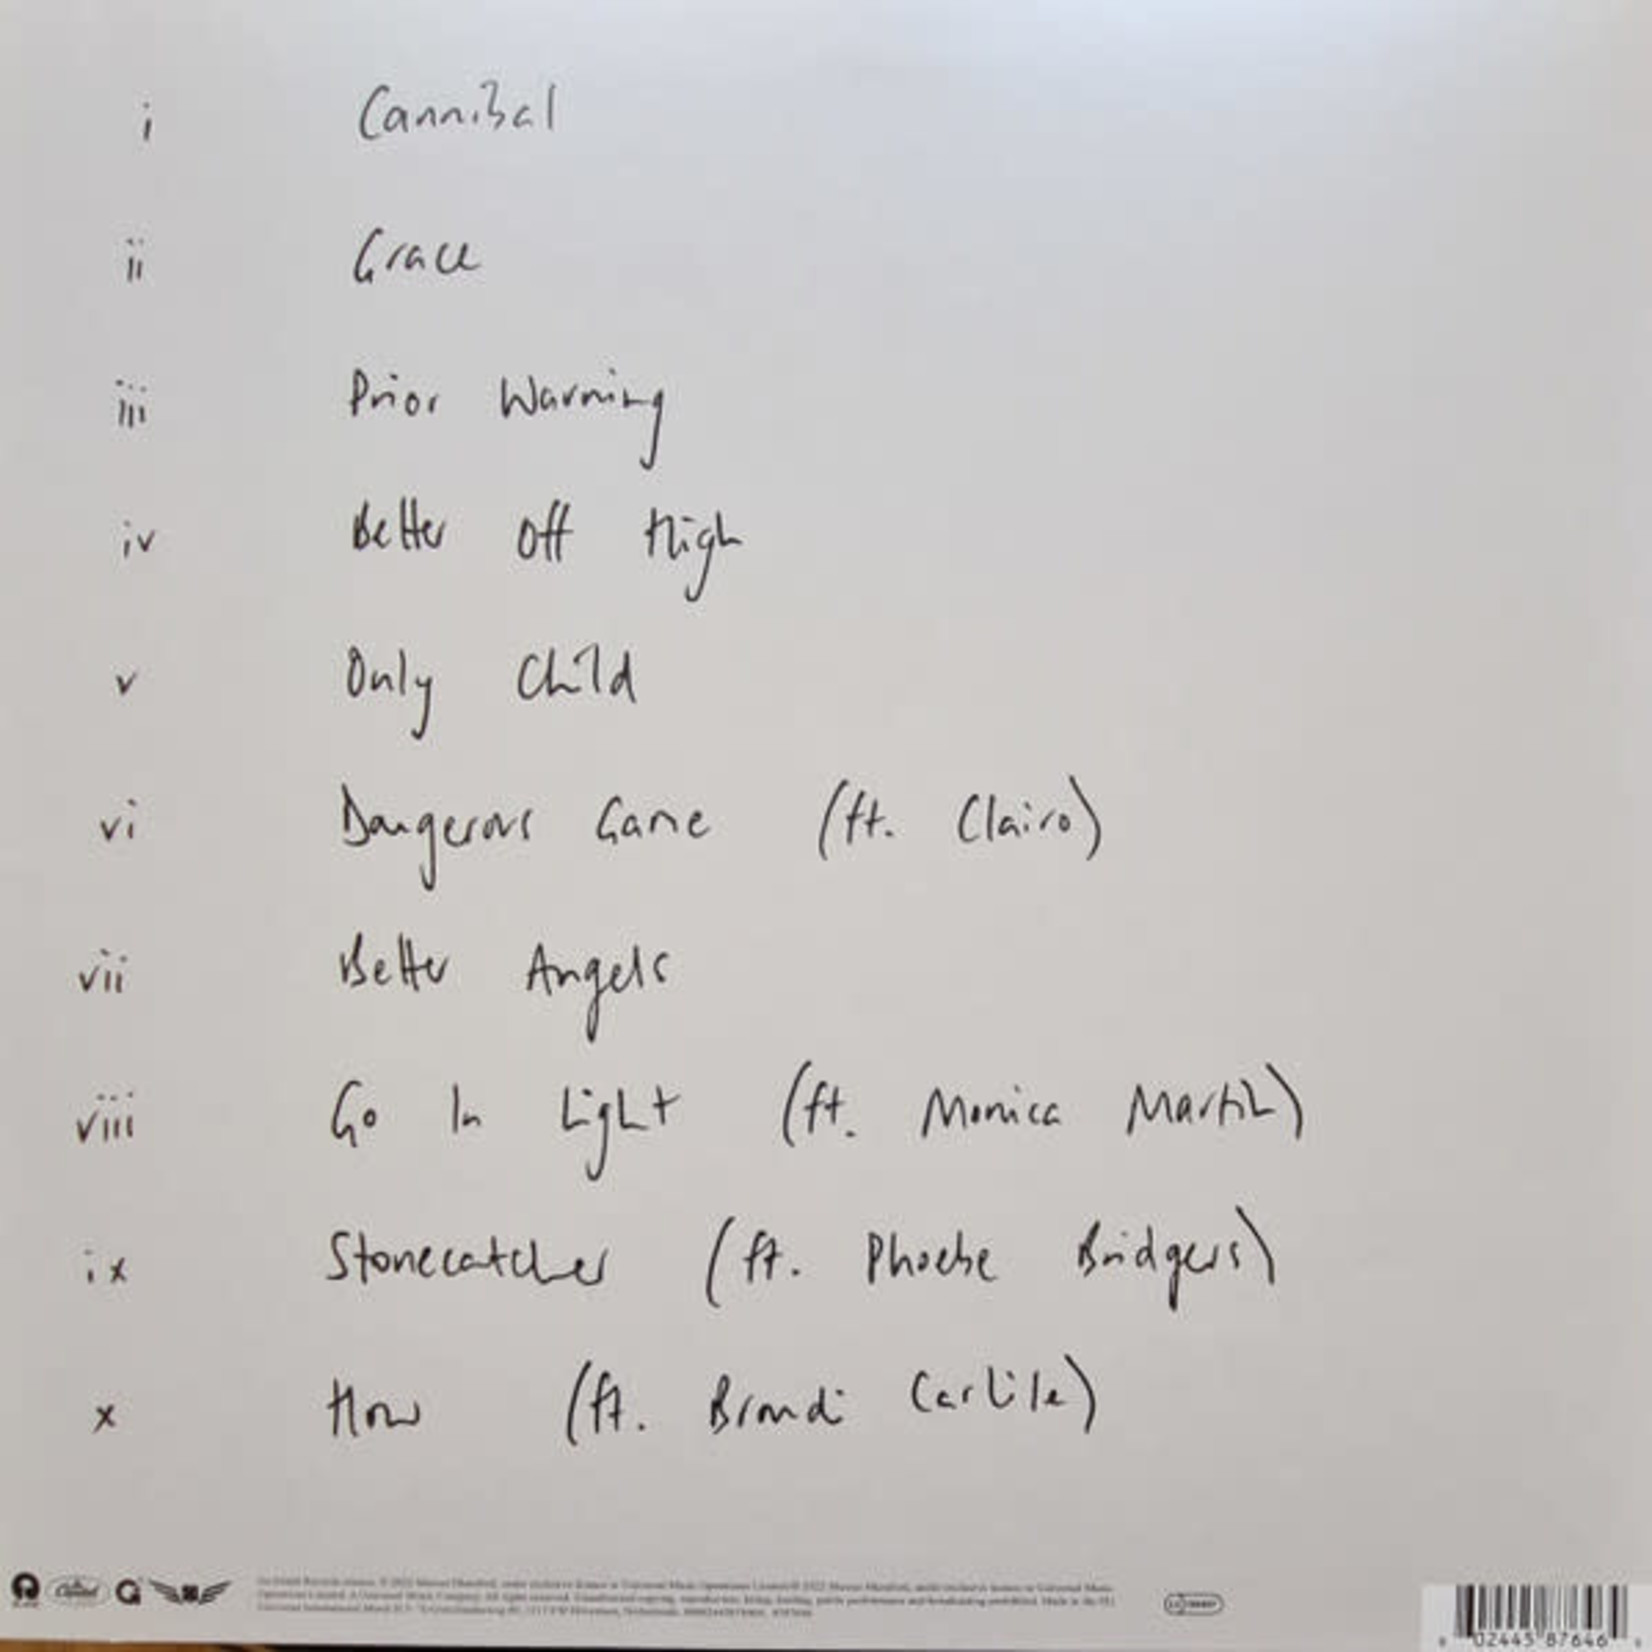 Marcus Mumford - Self-Titled LP (Red Transparent vinyl)